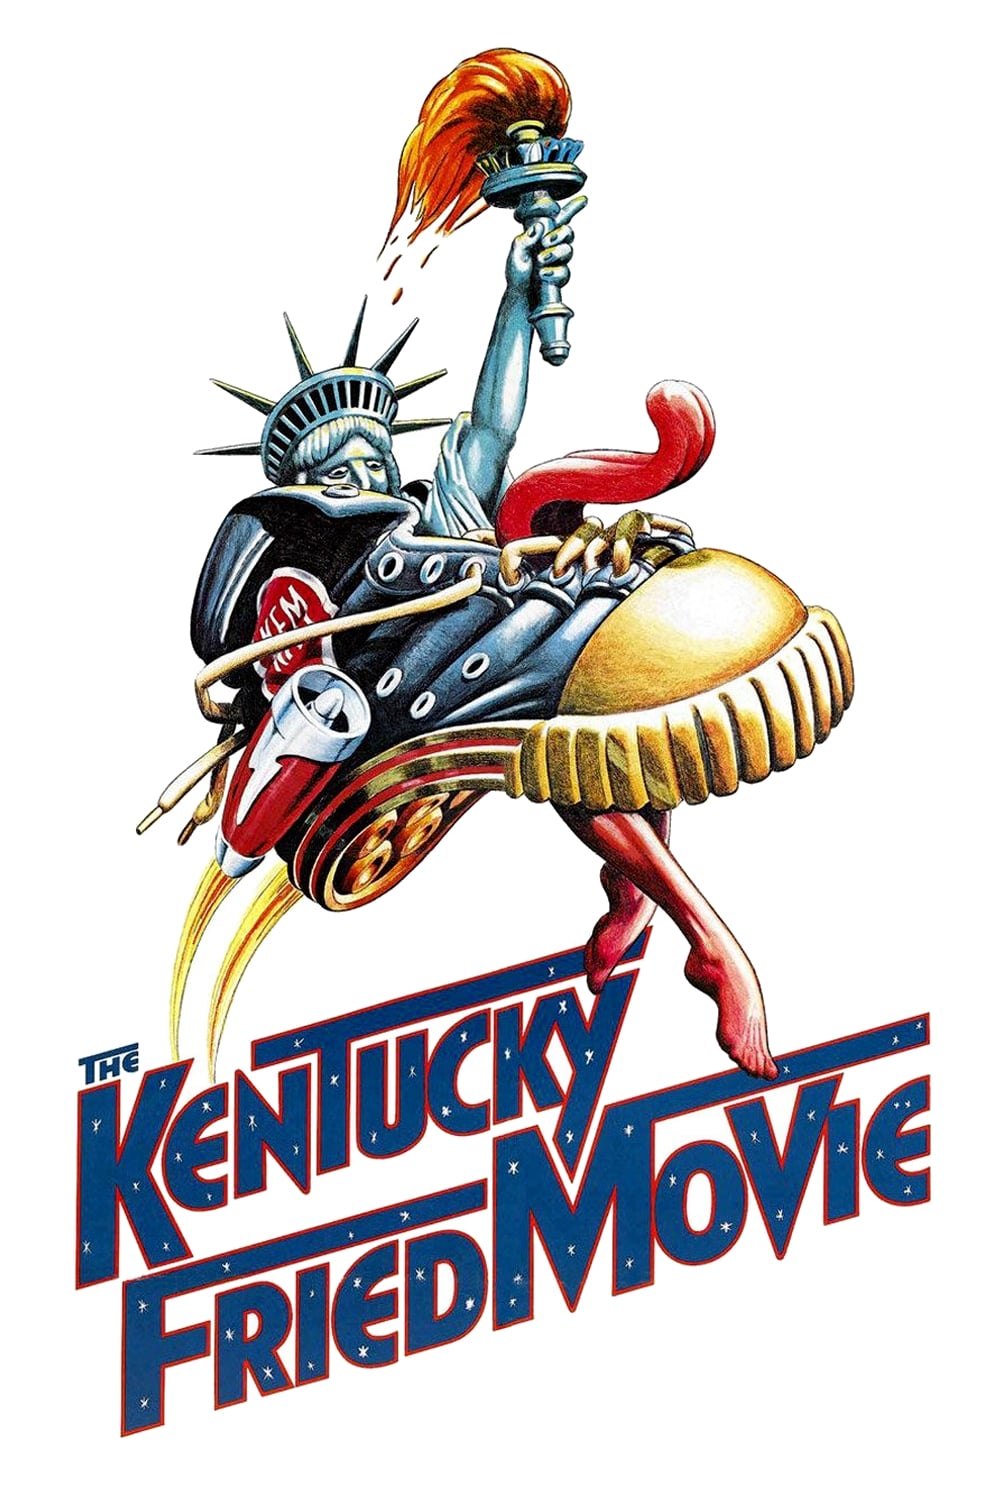 The Kentucky Fried Movie (1977)